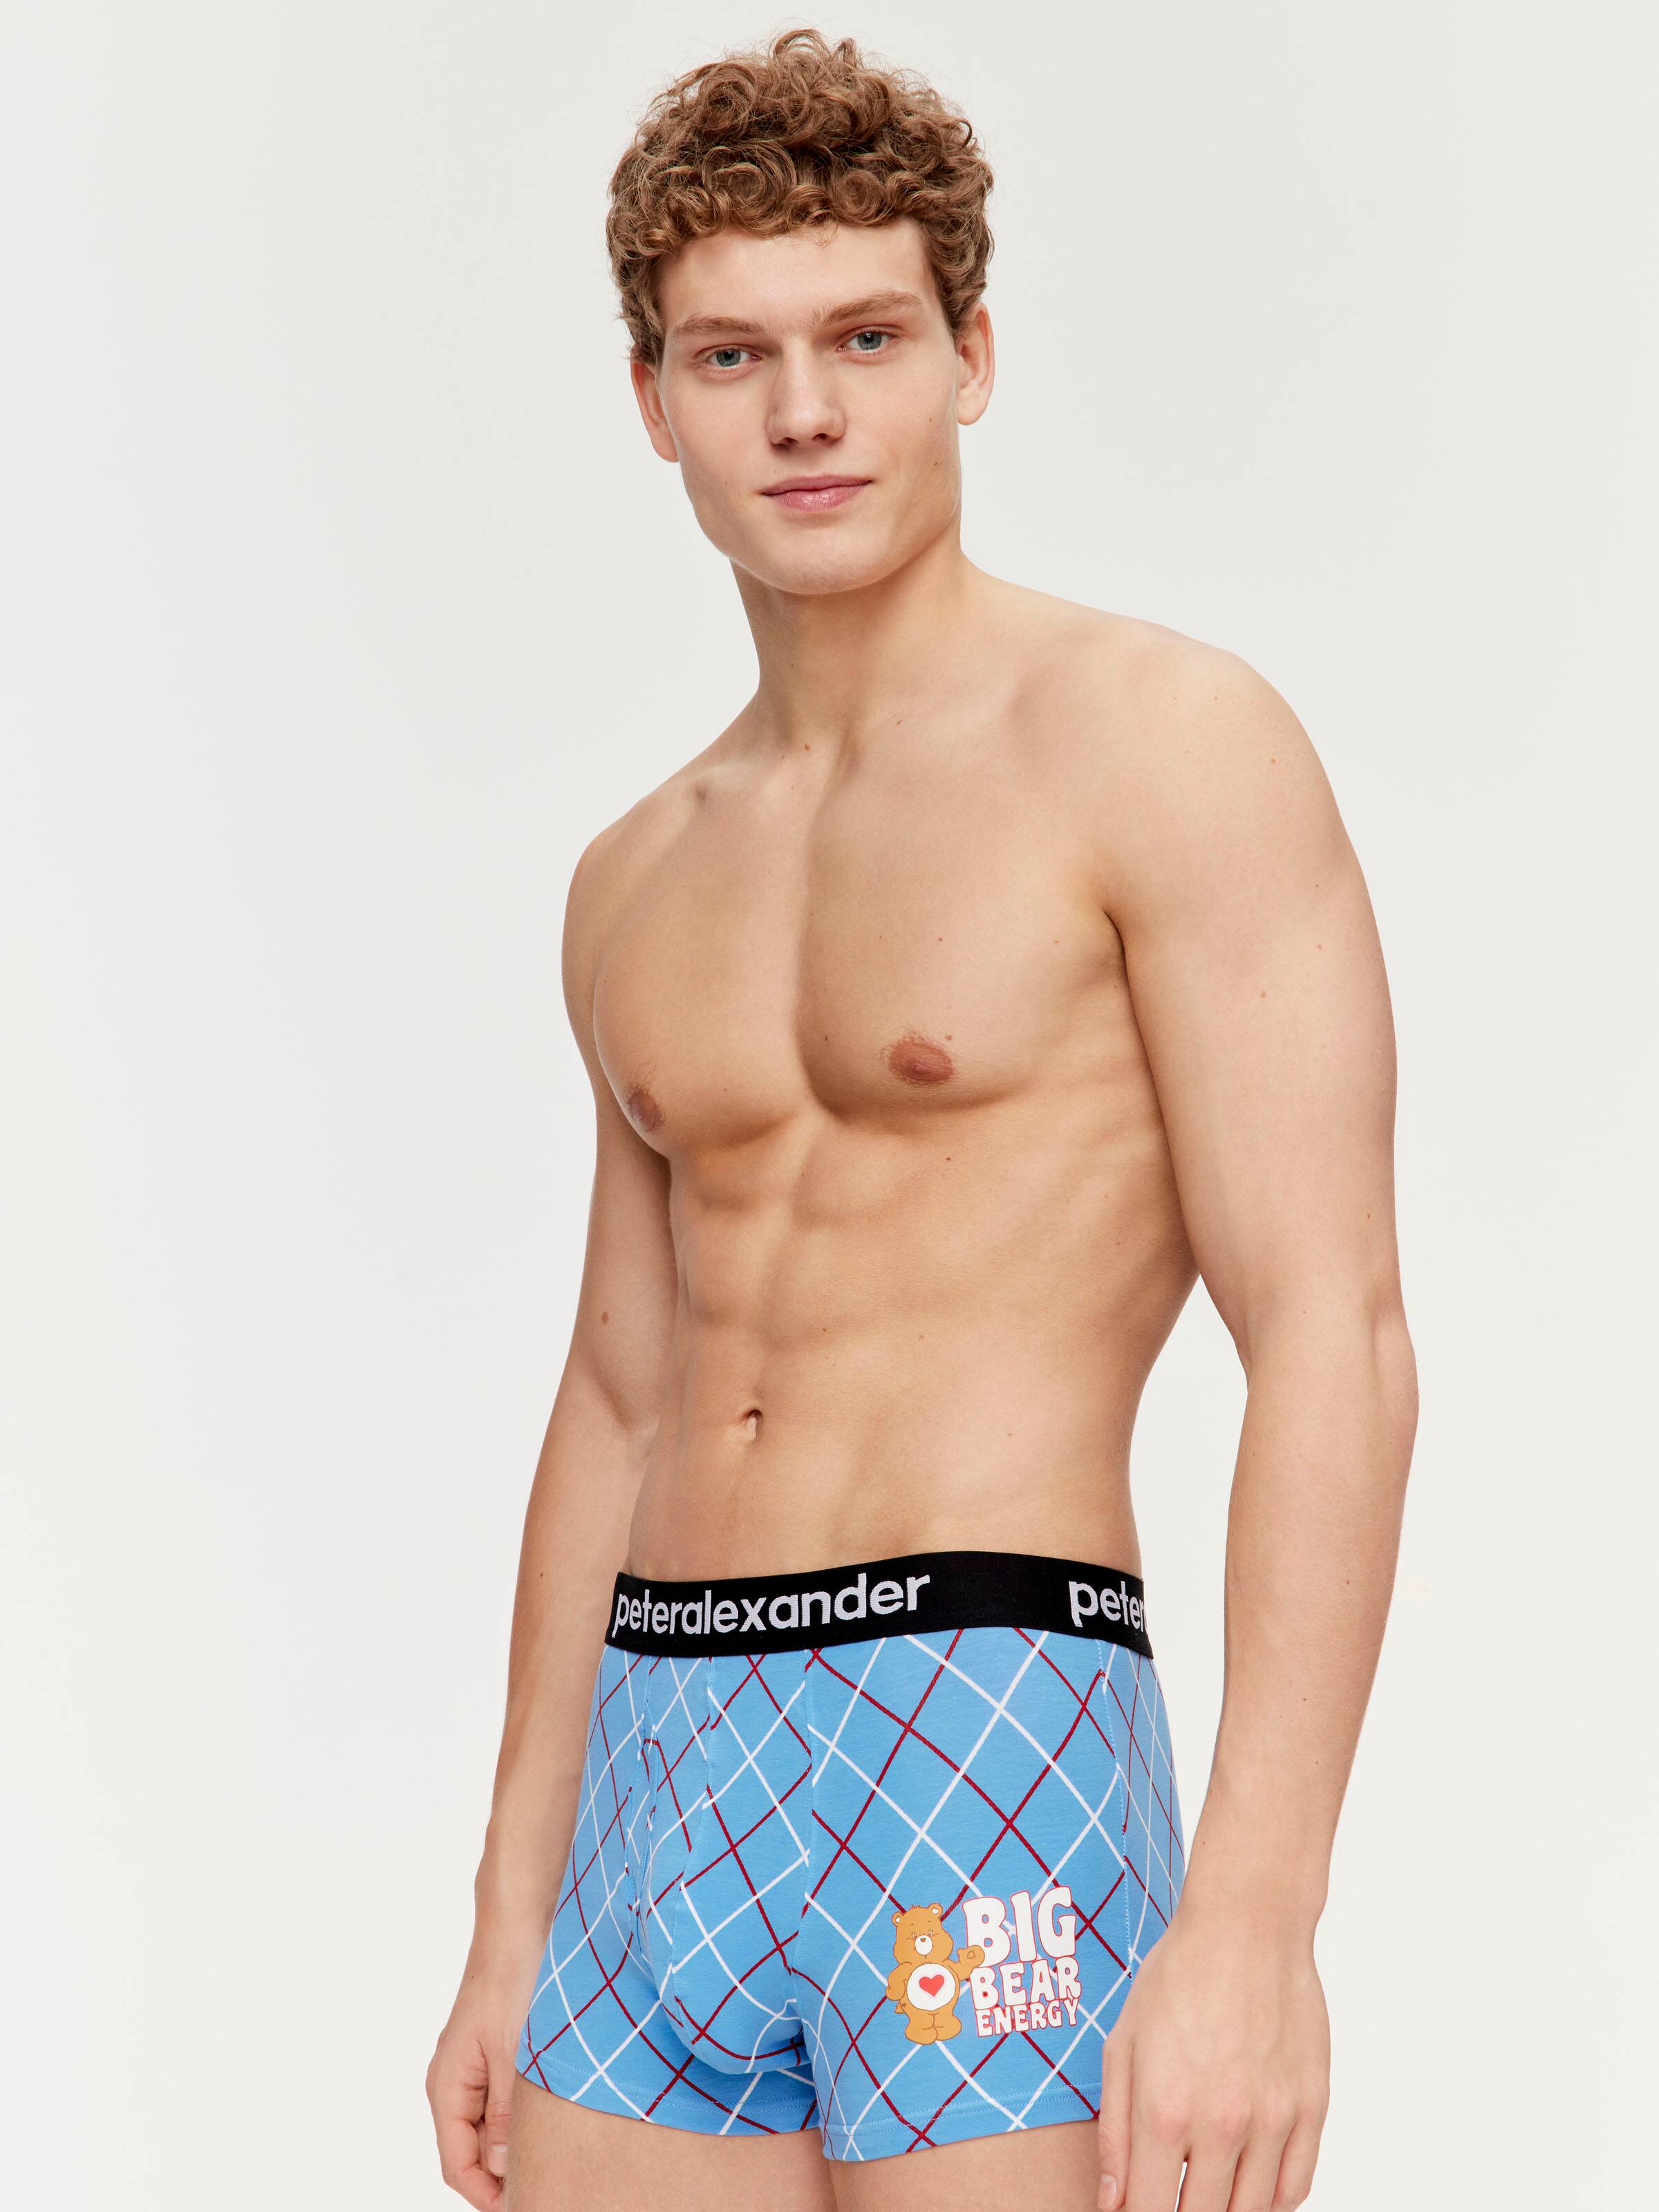 Plus-size male underwear: Comfort Republic